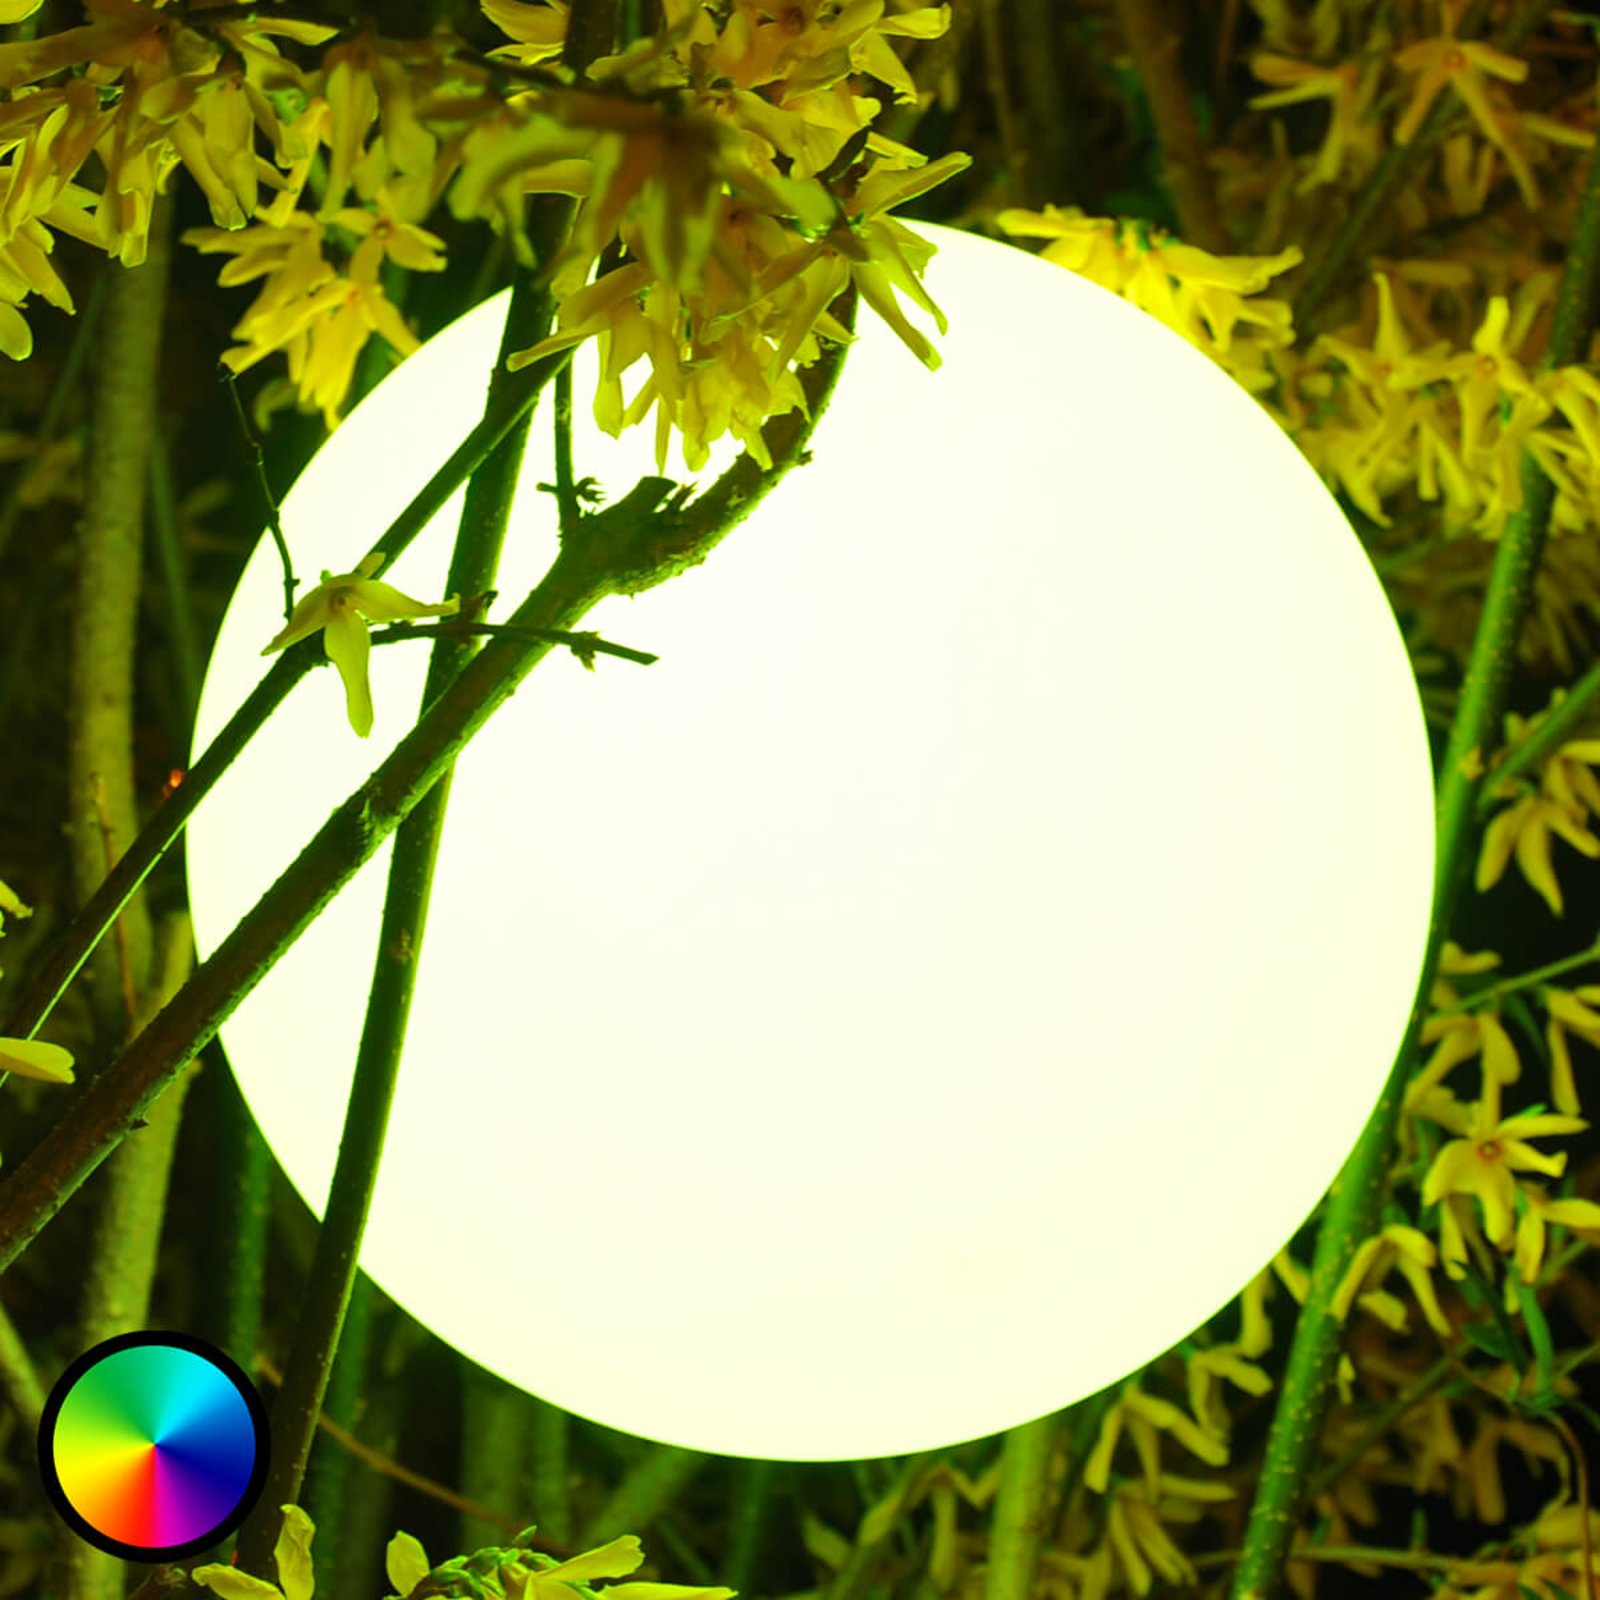 Pearl - LED globe light, controllable via Handy